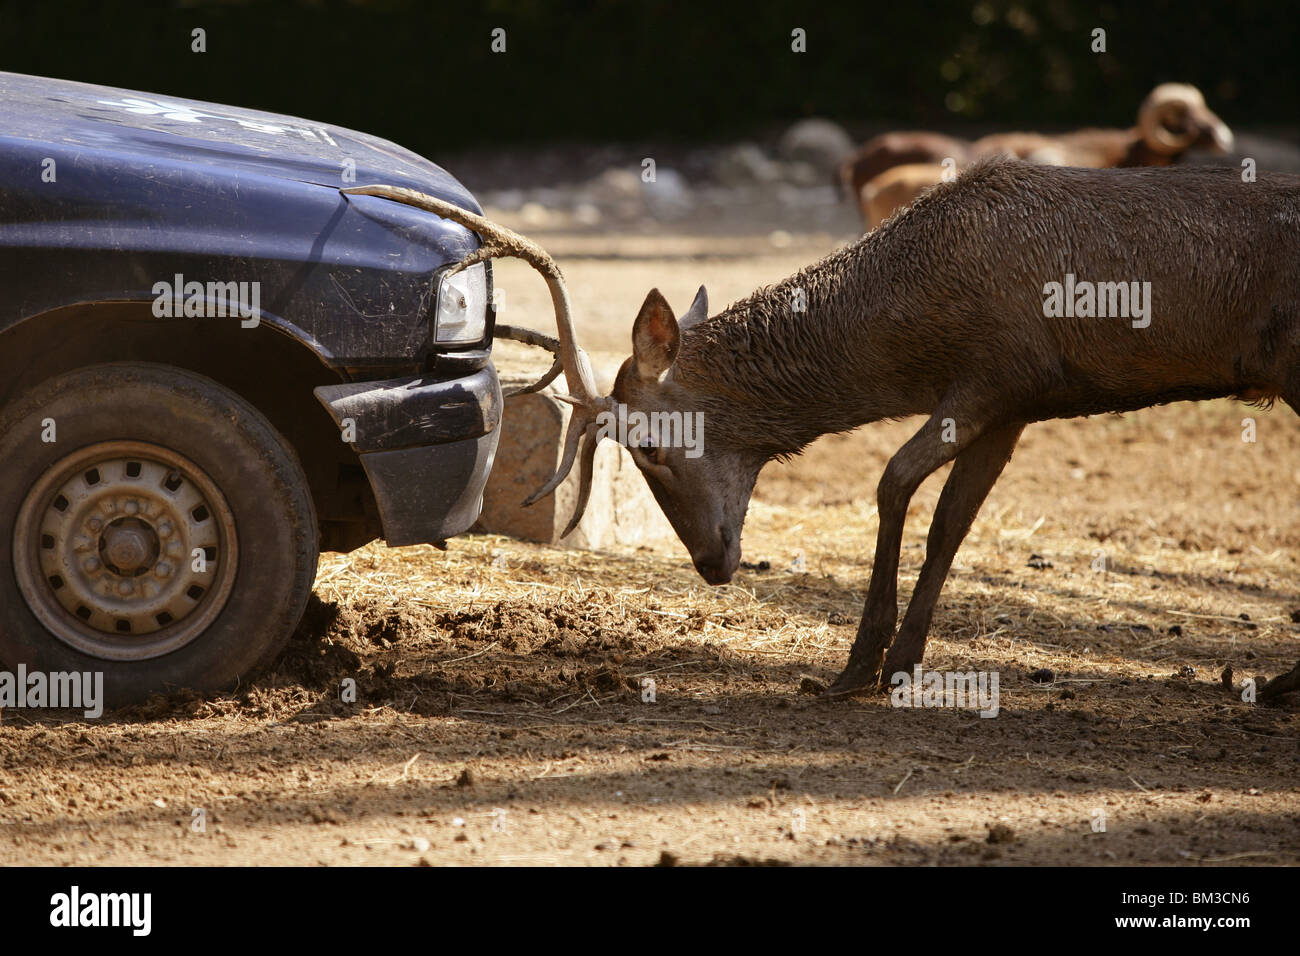 https://c8.alamy.com/comp/BM3CN6/deer-fighting-with-a-car-power-competition-combat-outdoors-BM3CN6.jpg